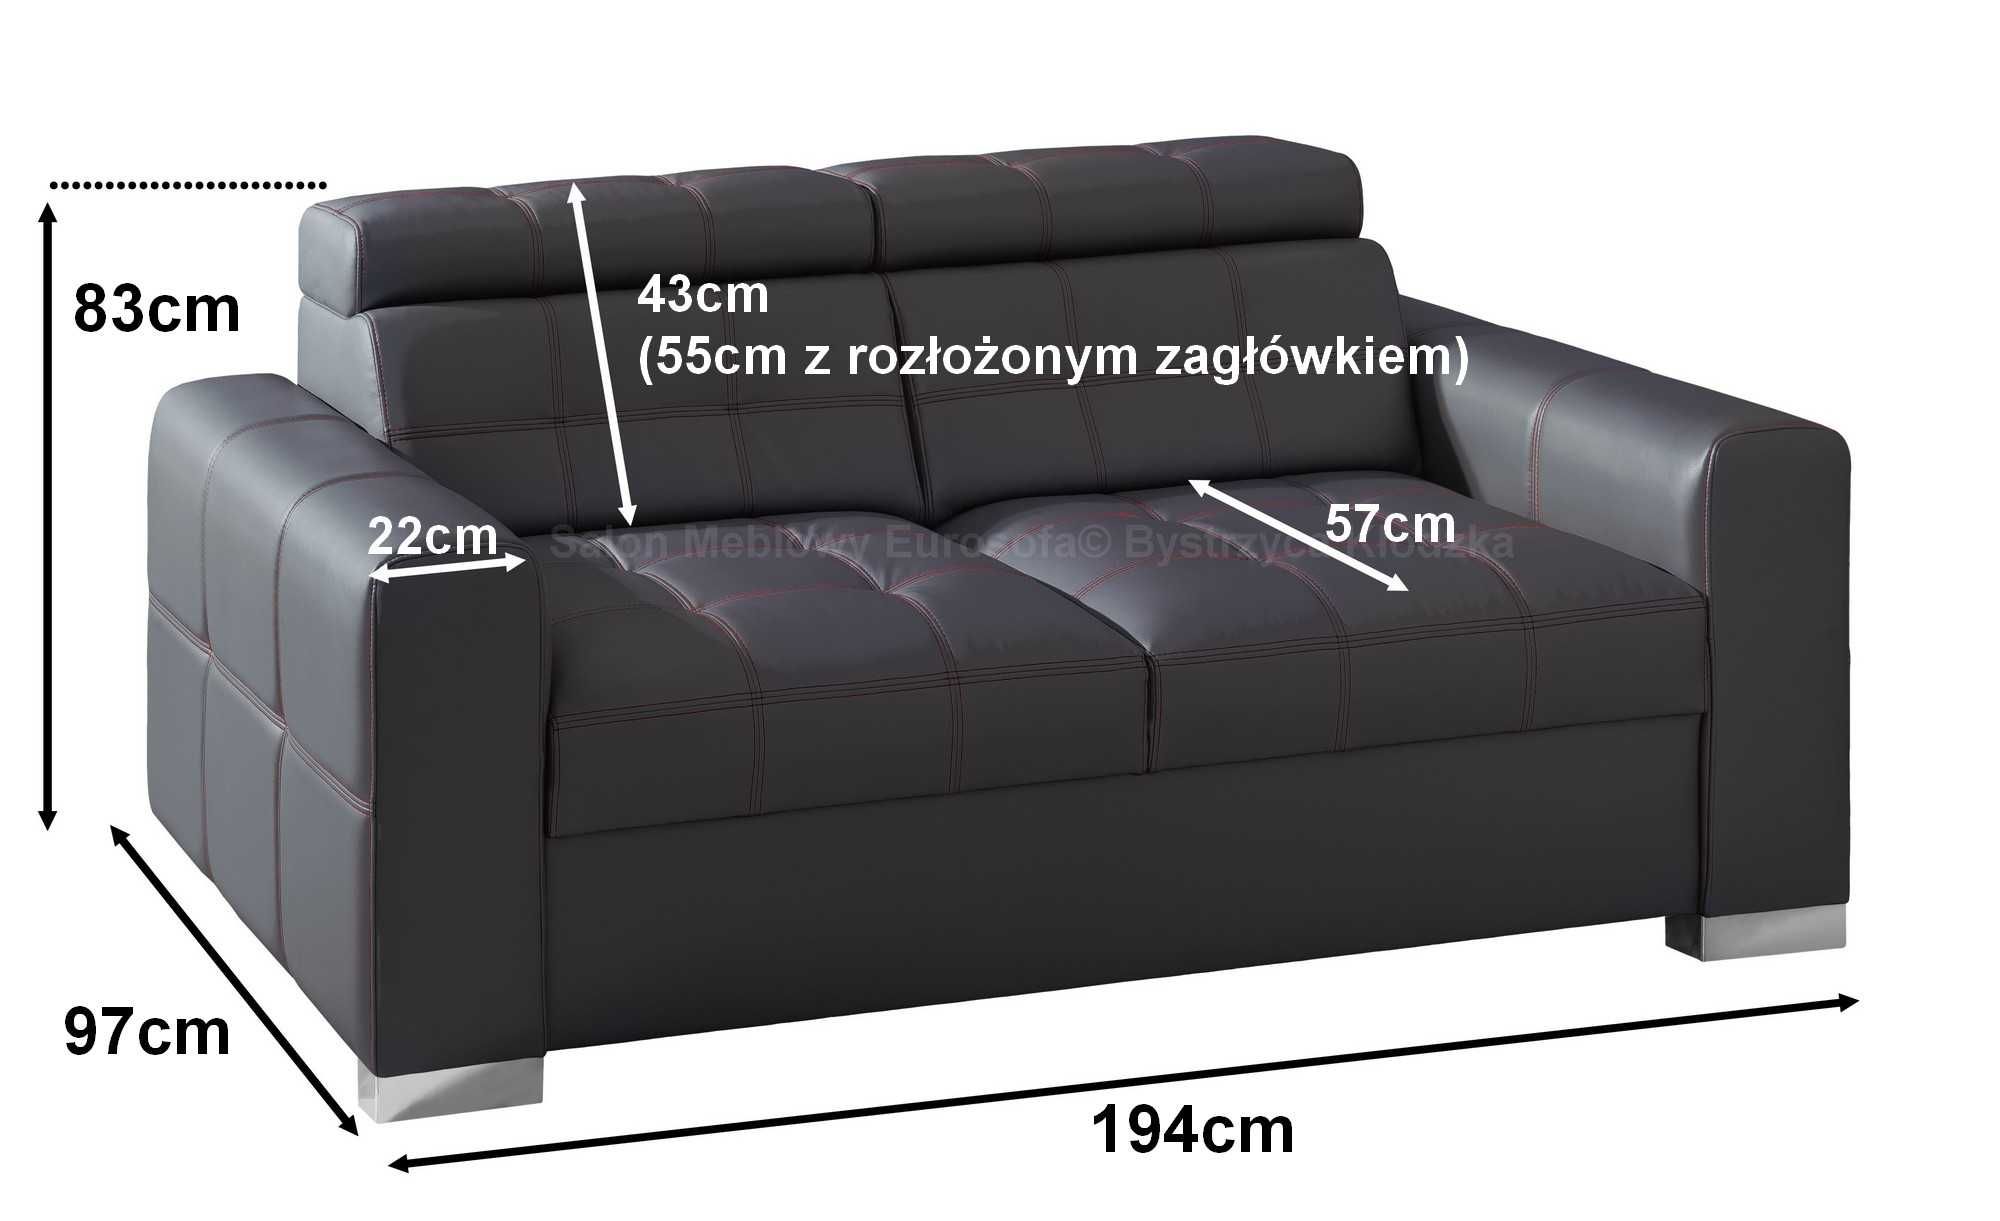 Sofa 194cm SKÓRA NATURALN kanapa skórzana PRODUCENT